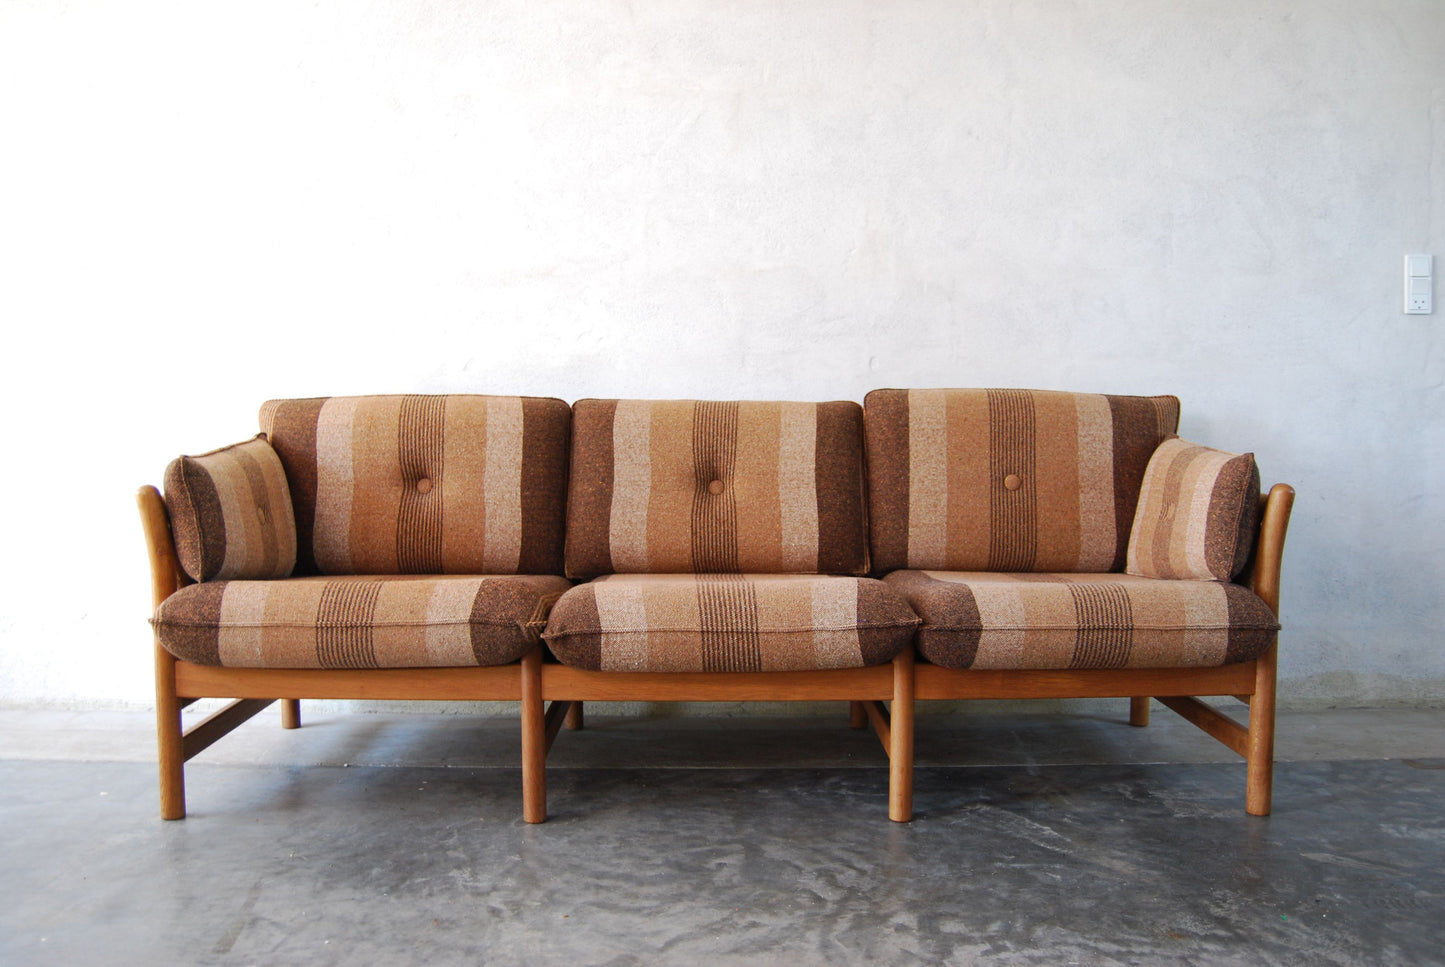 Three seat oak framed sofa